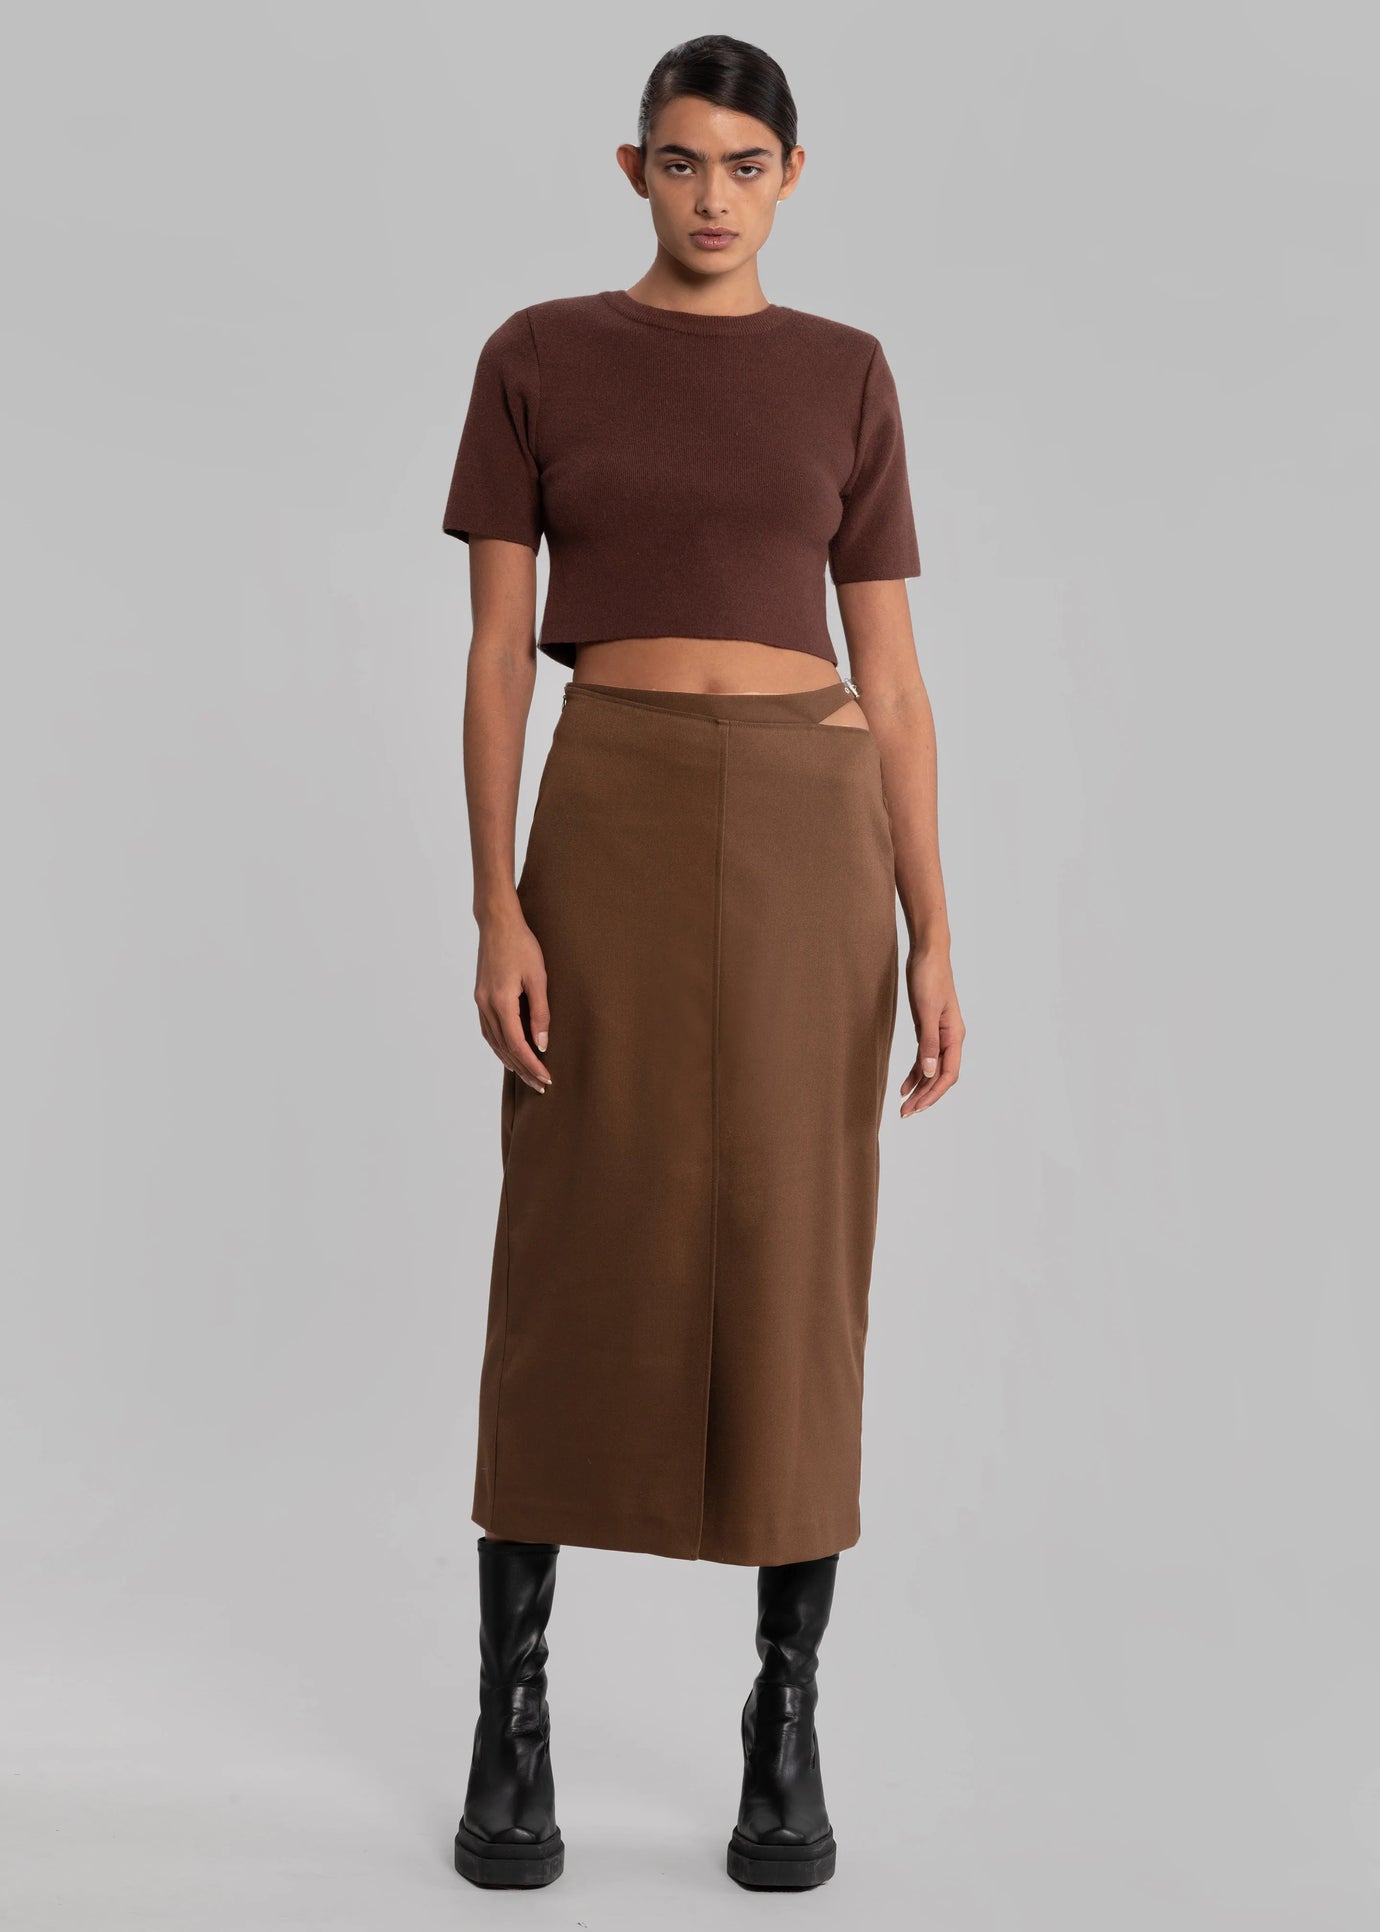 Stacia Cut Out Midi Skirt - Brown